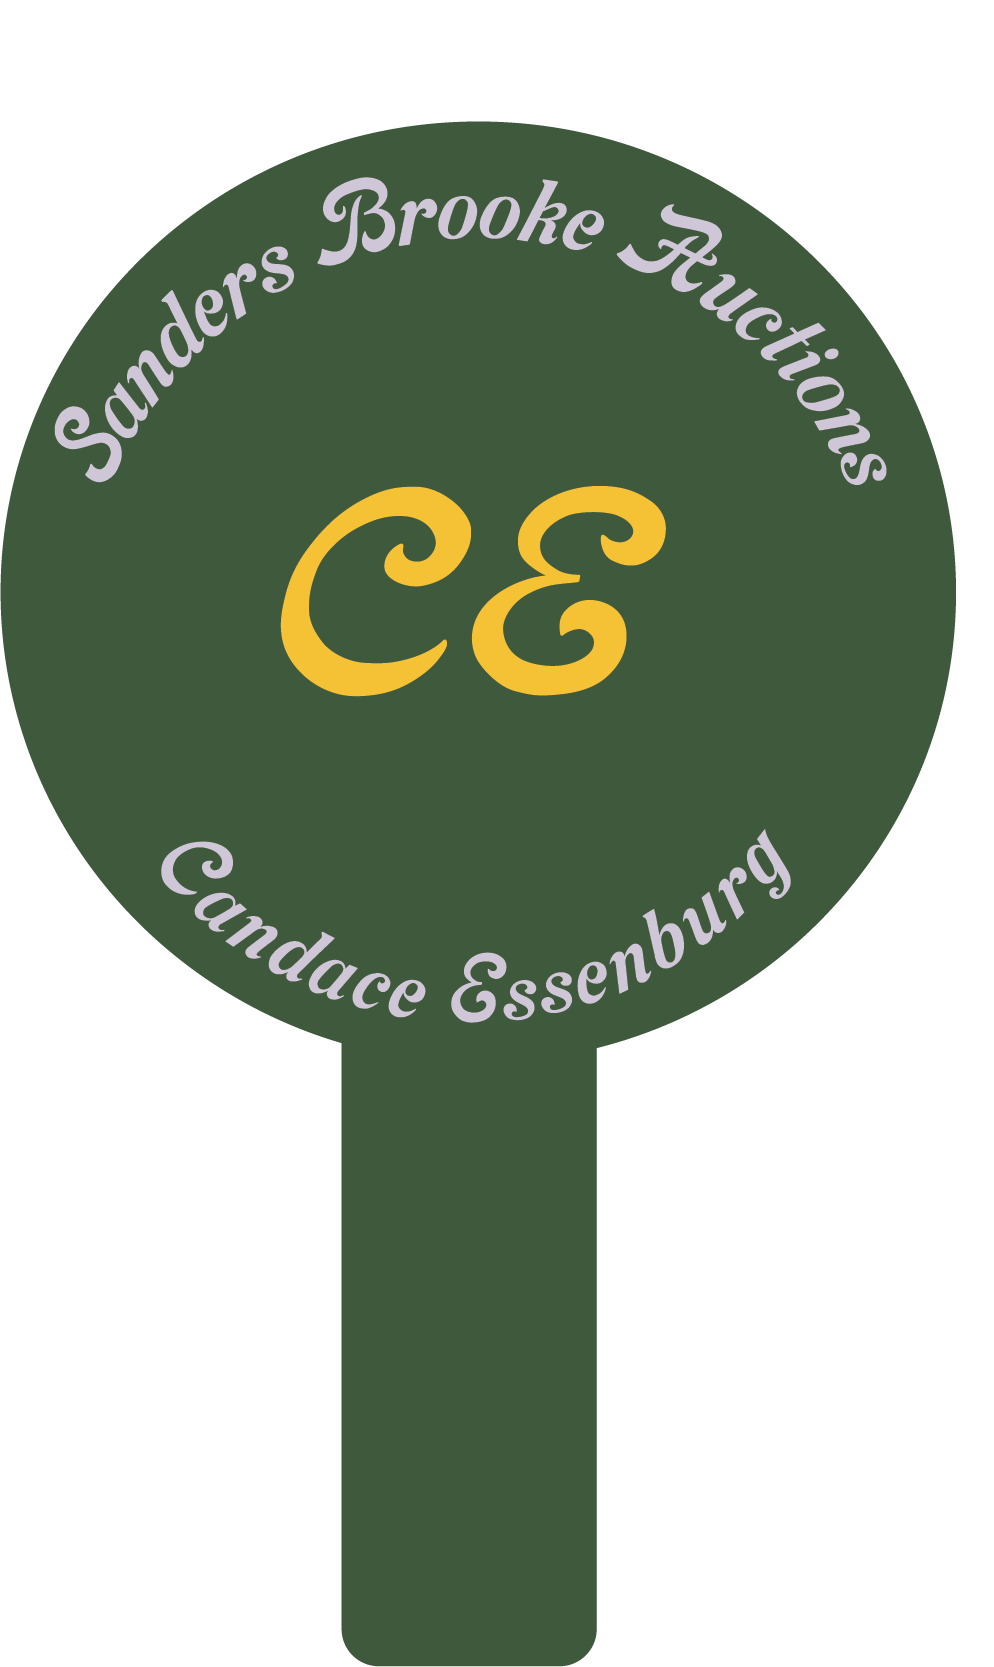 Candace Essenburg - Benefit Auctioneer